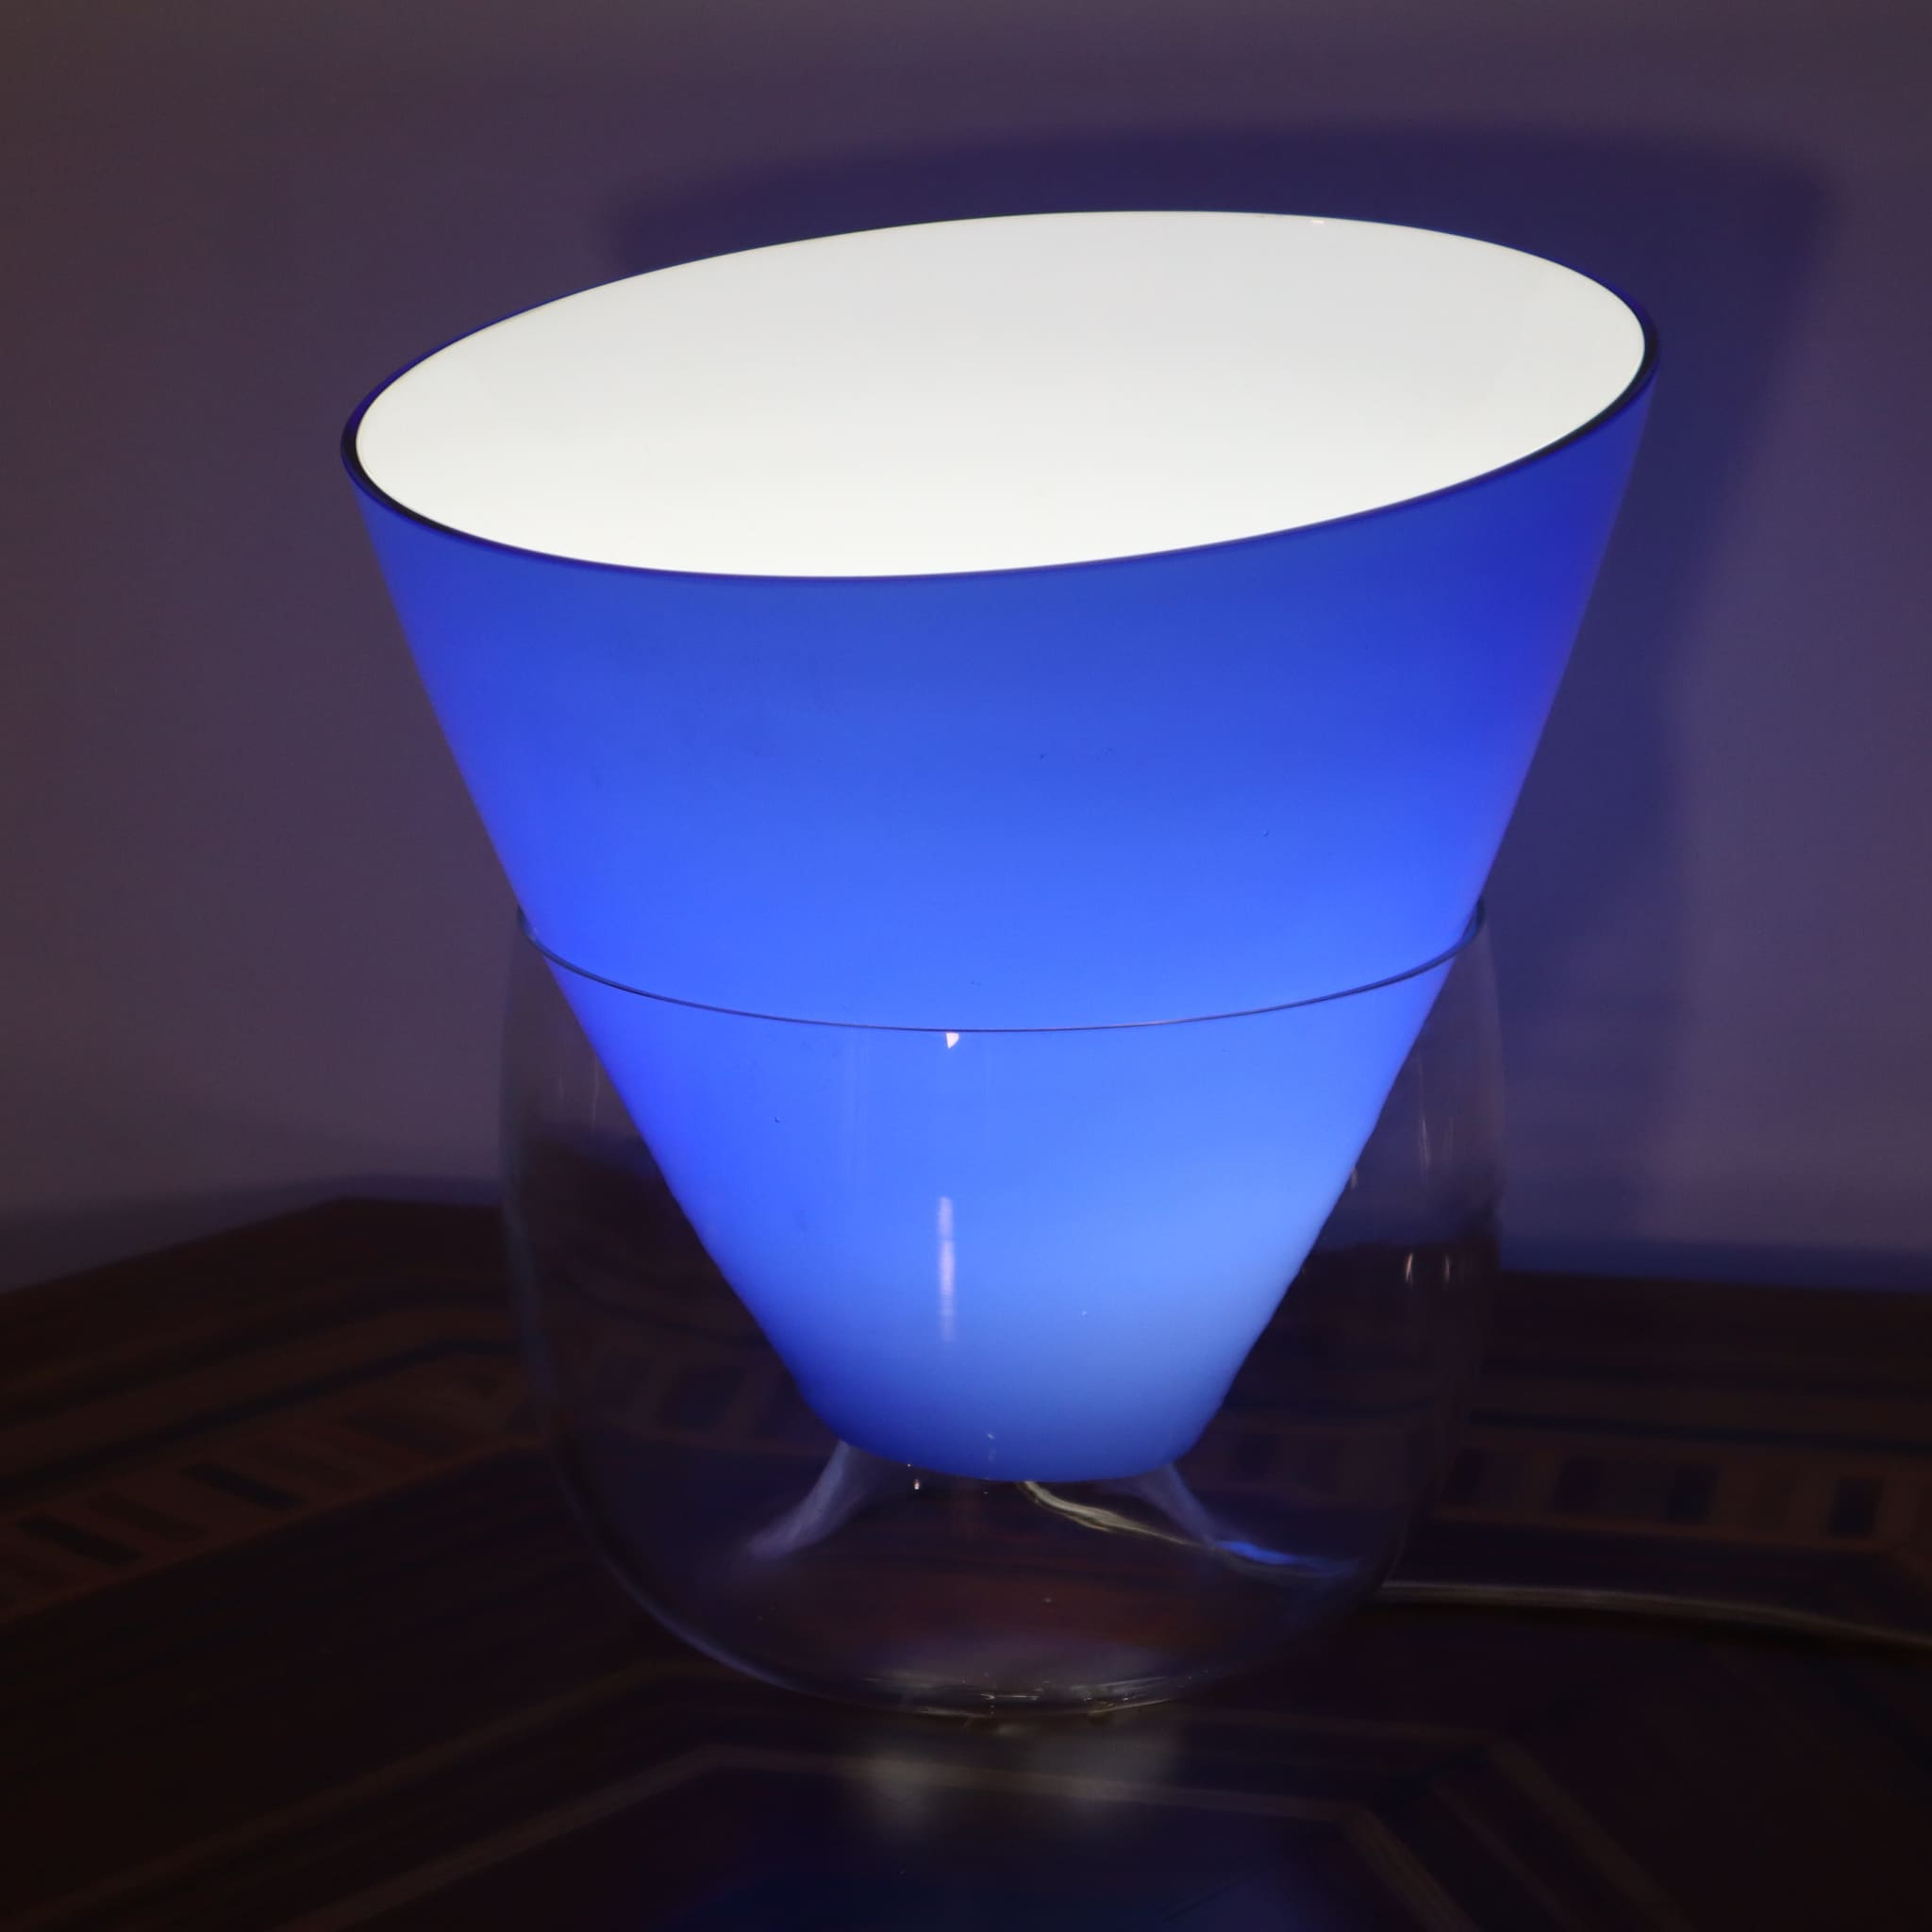 visionidepoca-visions-depoca-tocada-lamurrina-table-lamp-blue-glass-vintage-design-modern-antiques-furniture-made-italy-1